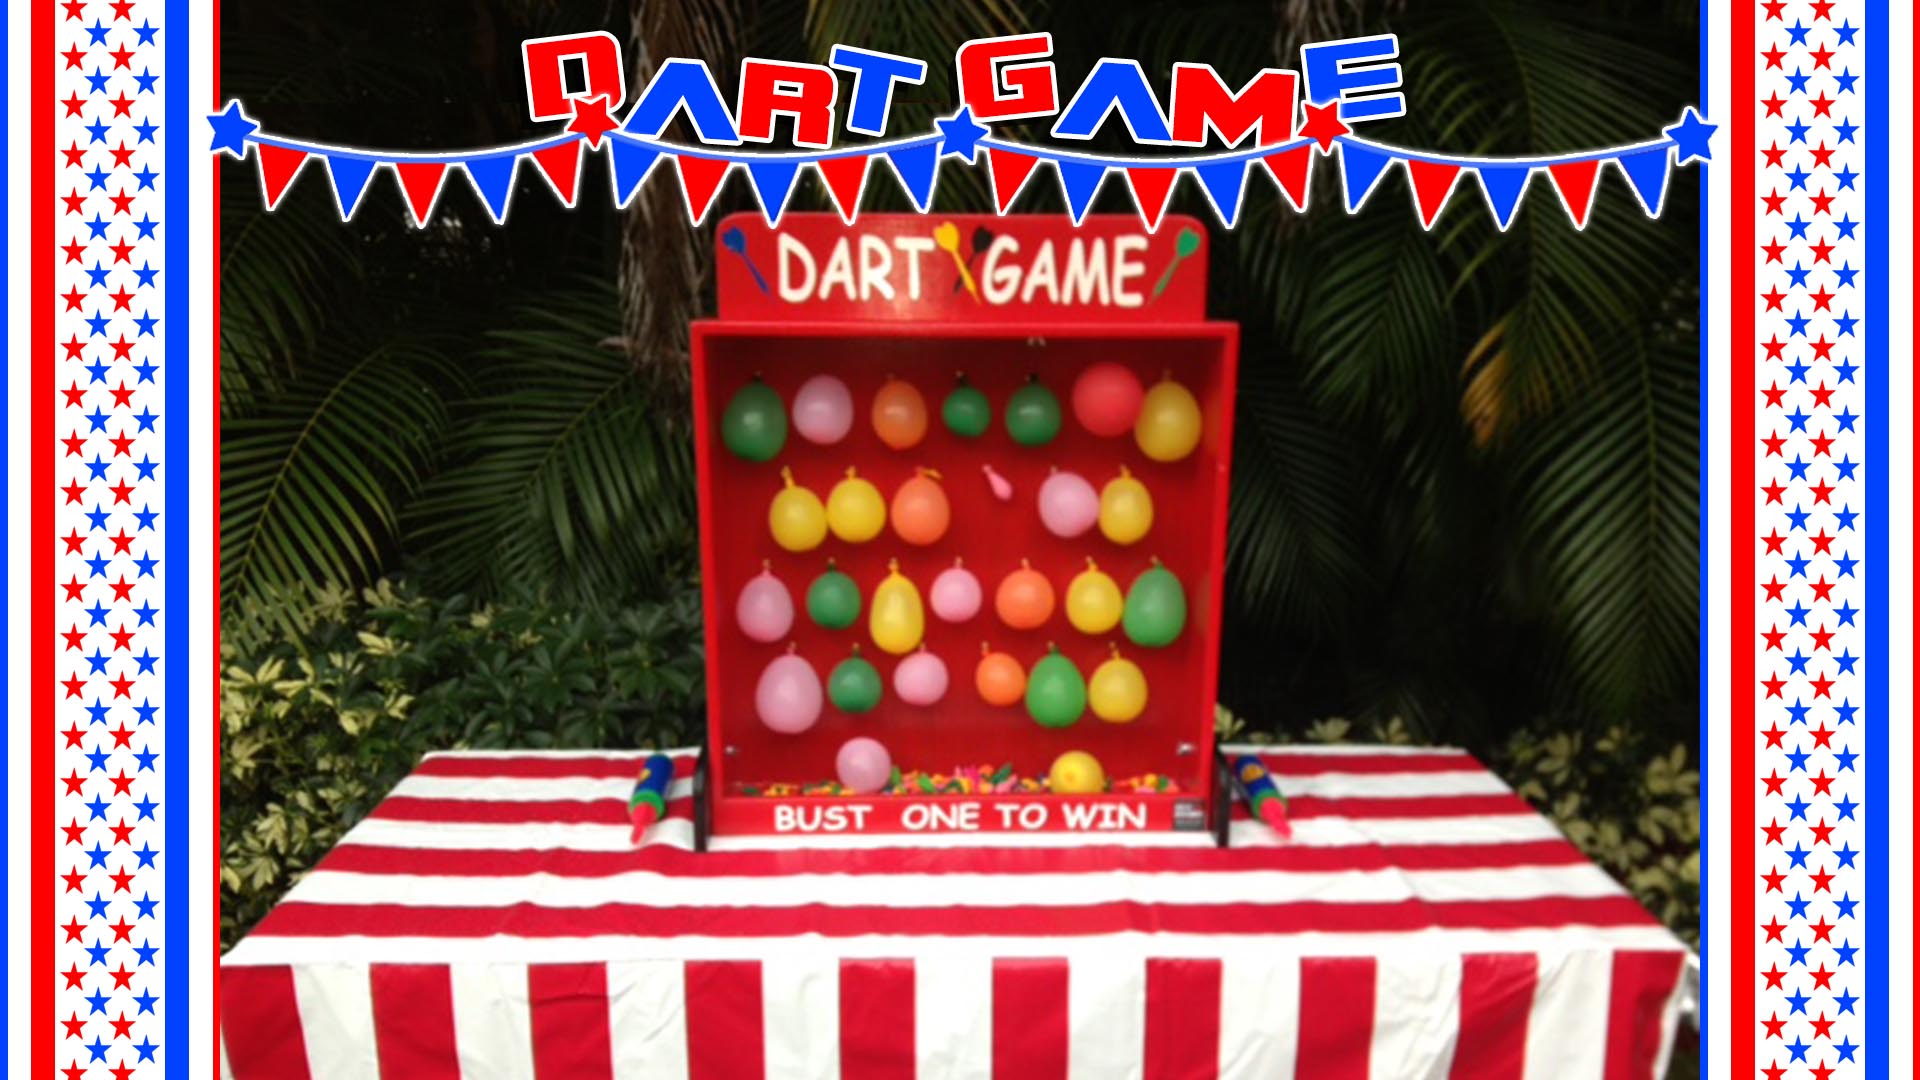 dart balloon pop carnival game